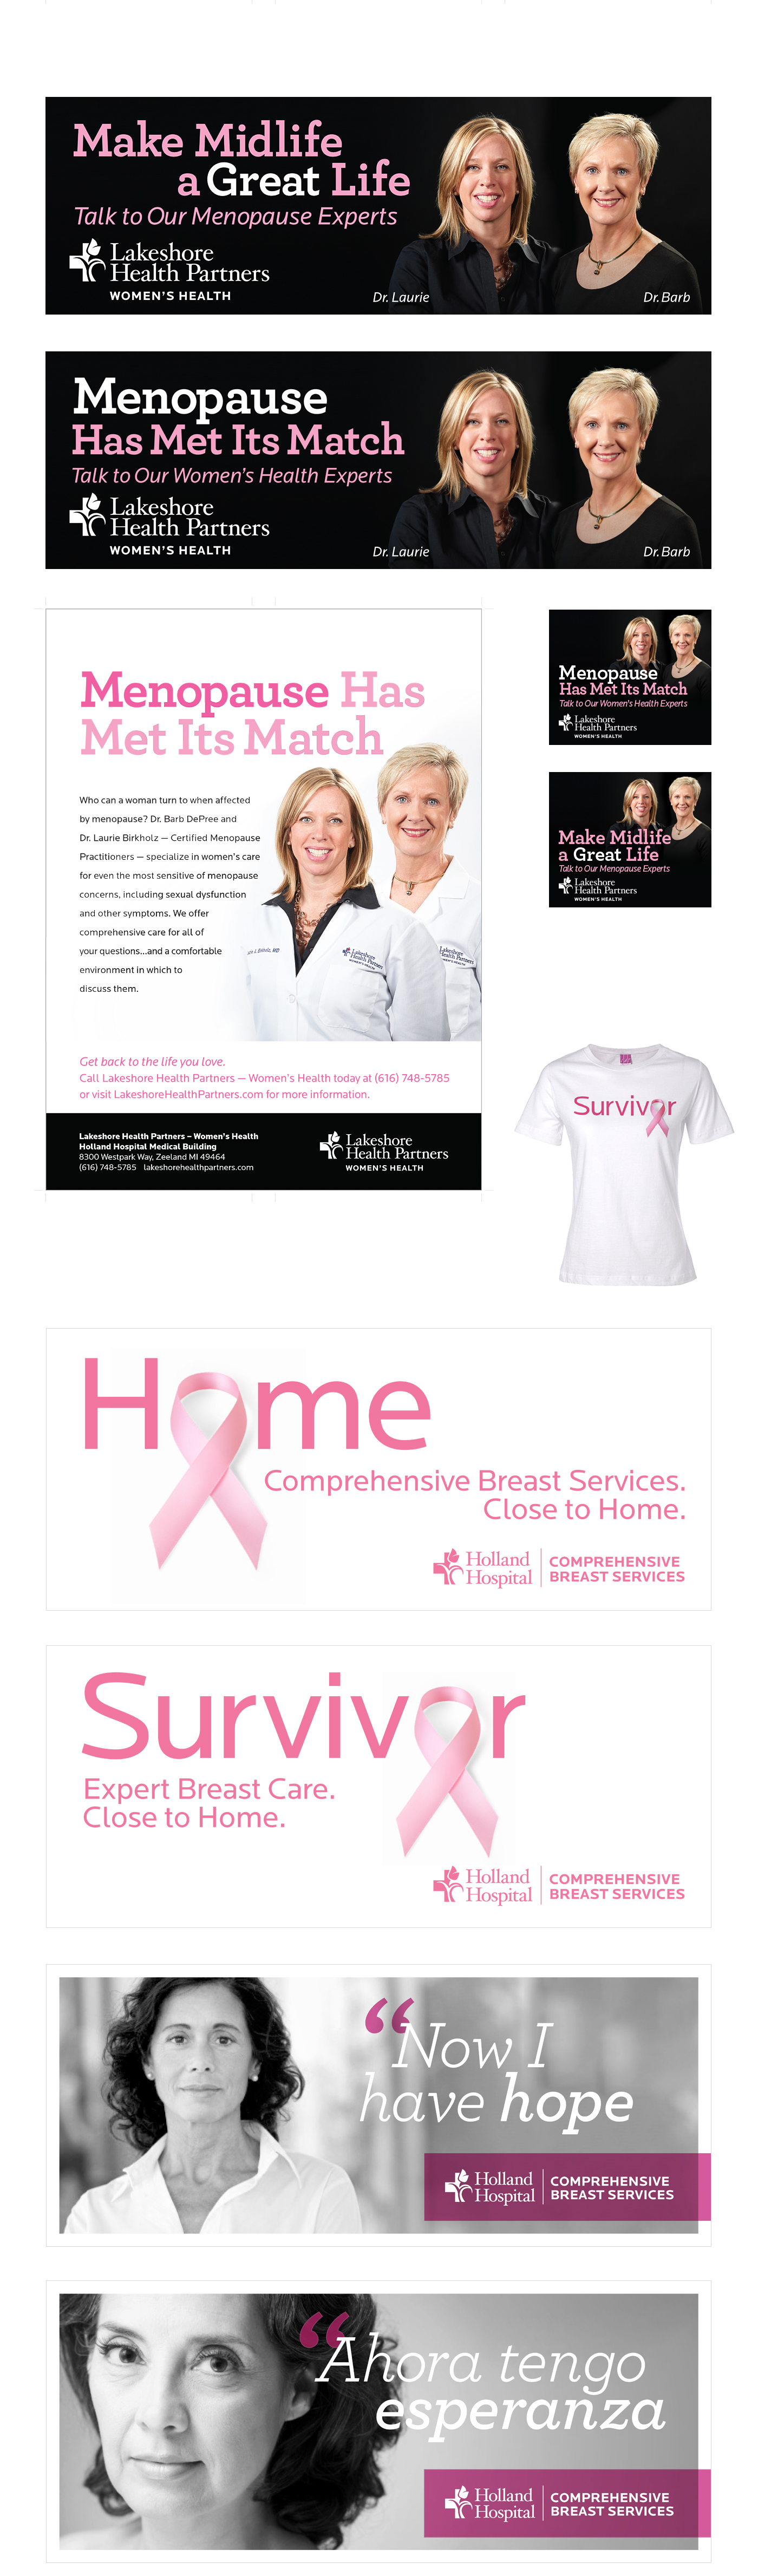 women Health breast care hospital female midlife menopause health marketing Holland health care